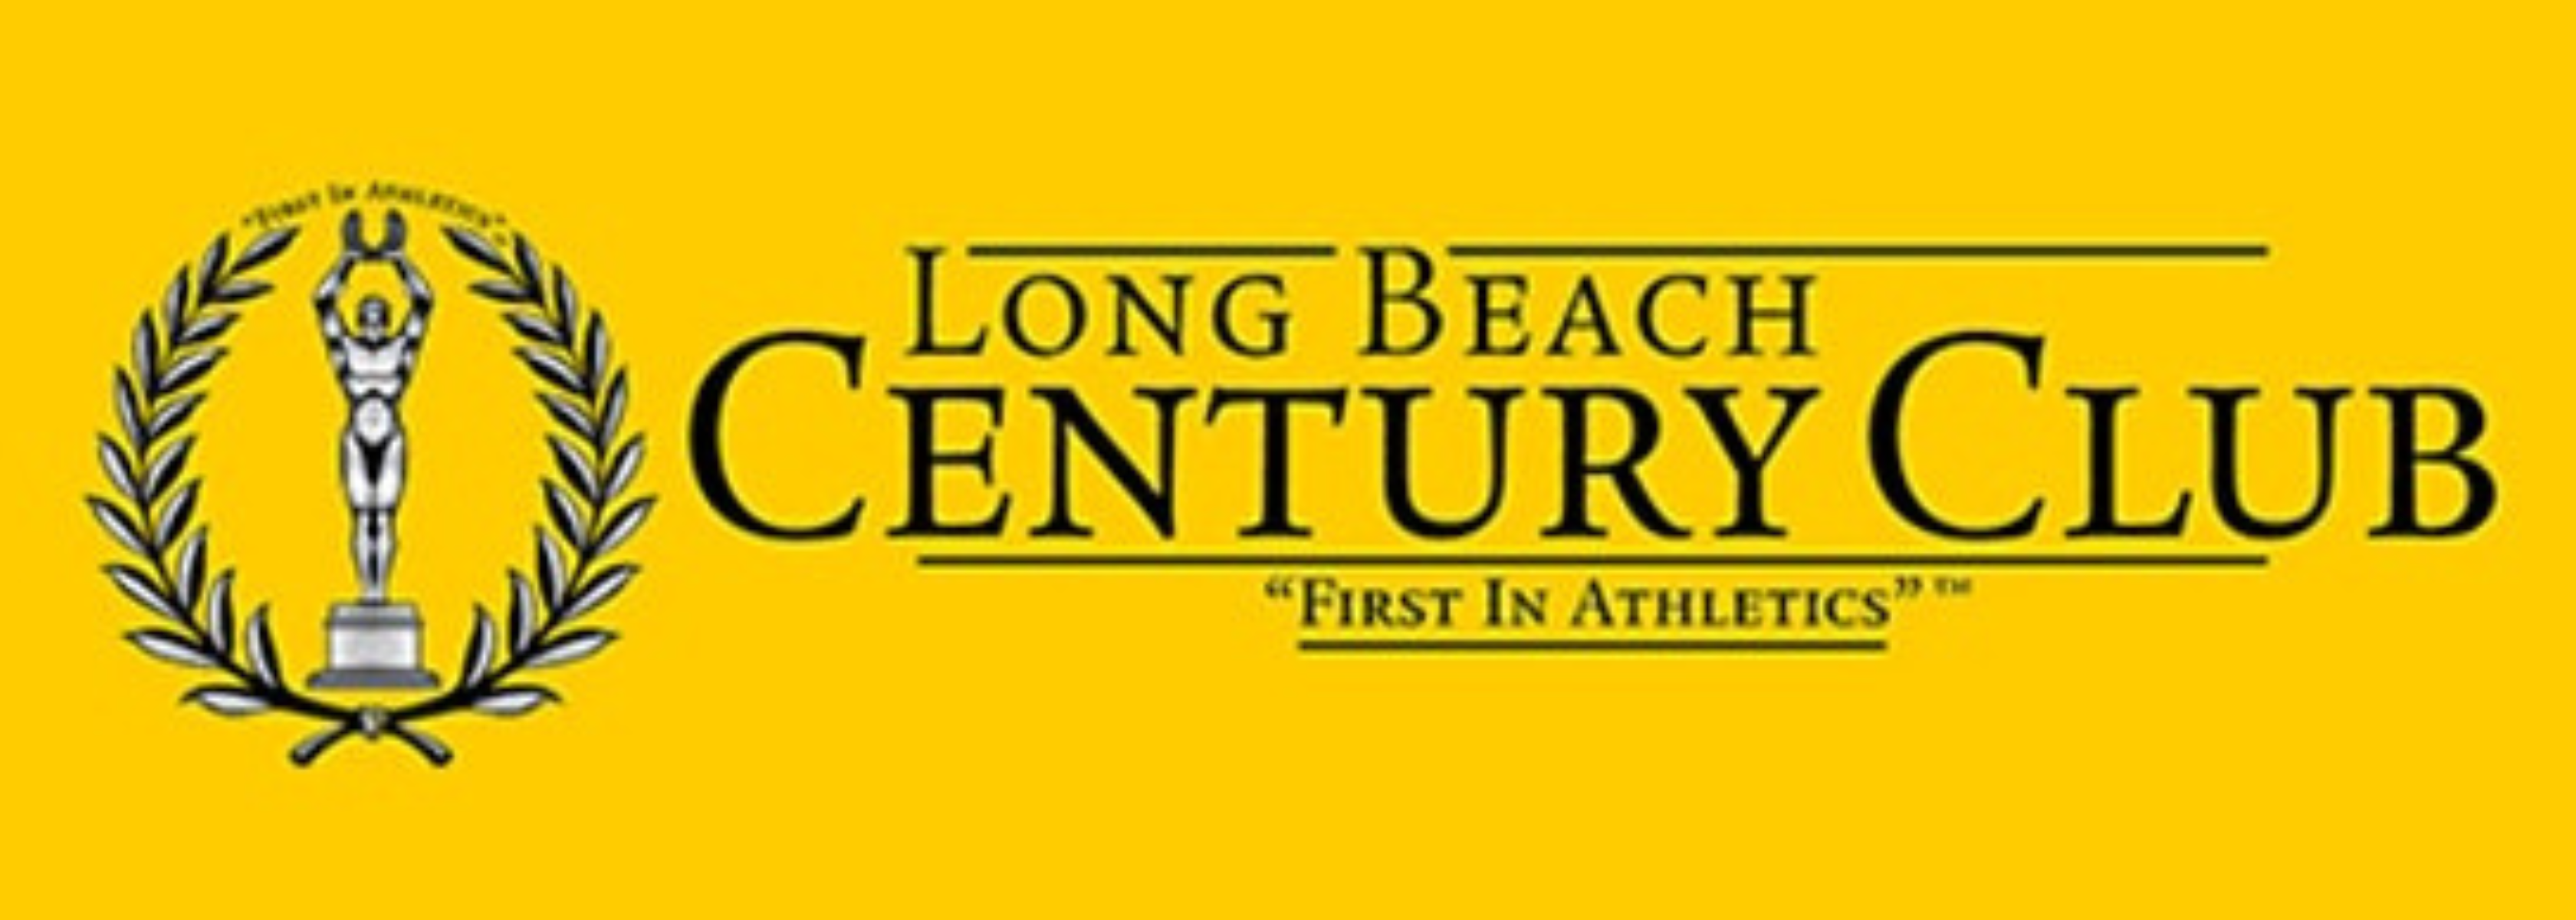 Long Beach Century Club